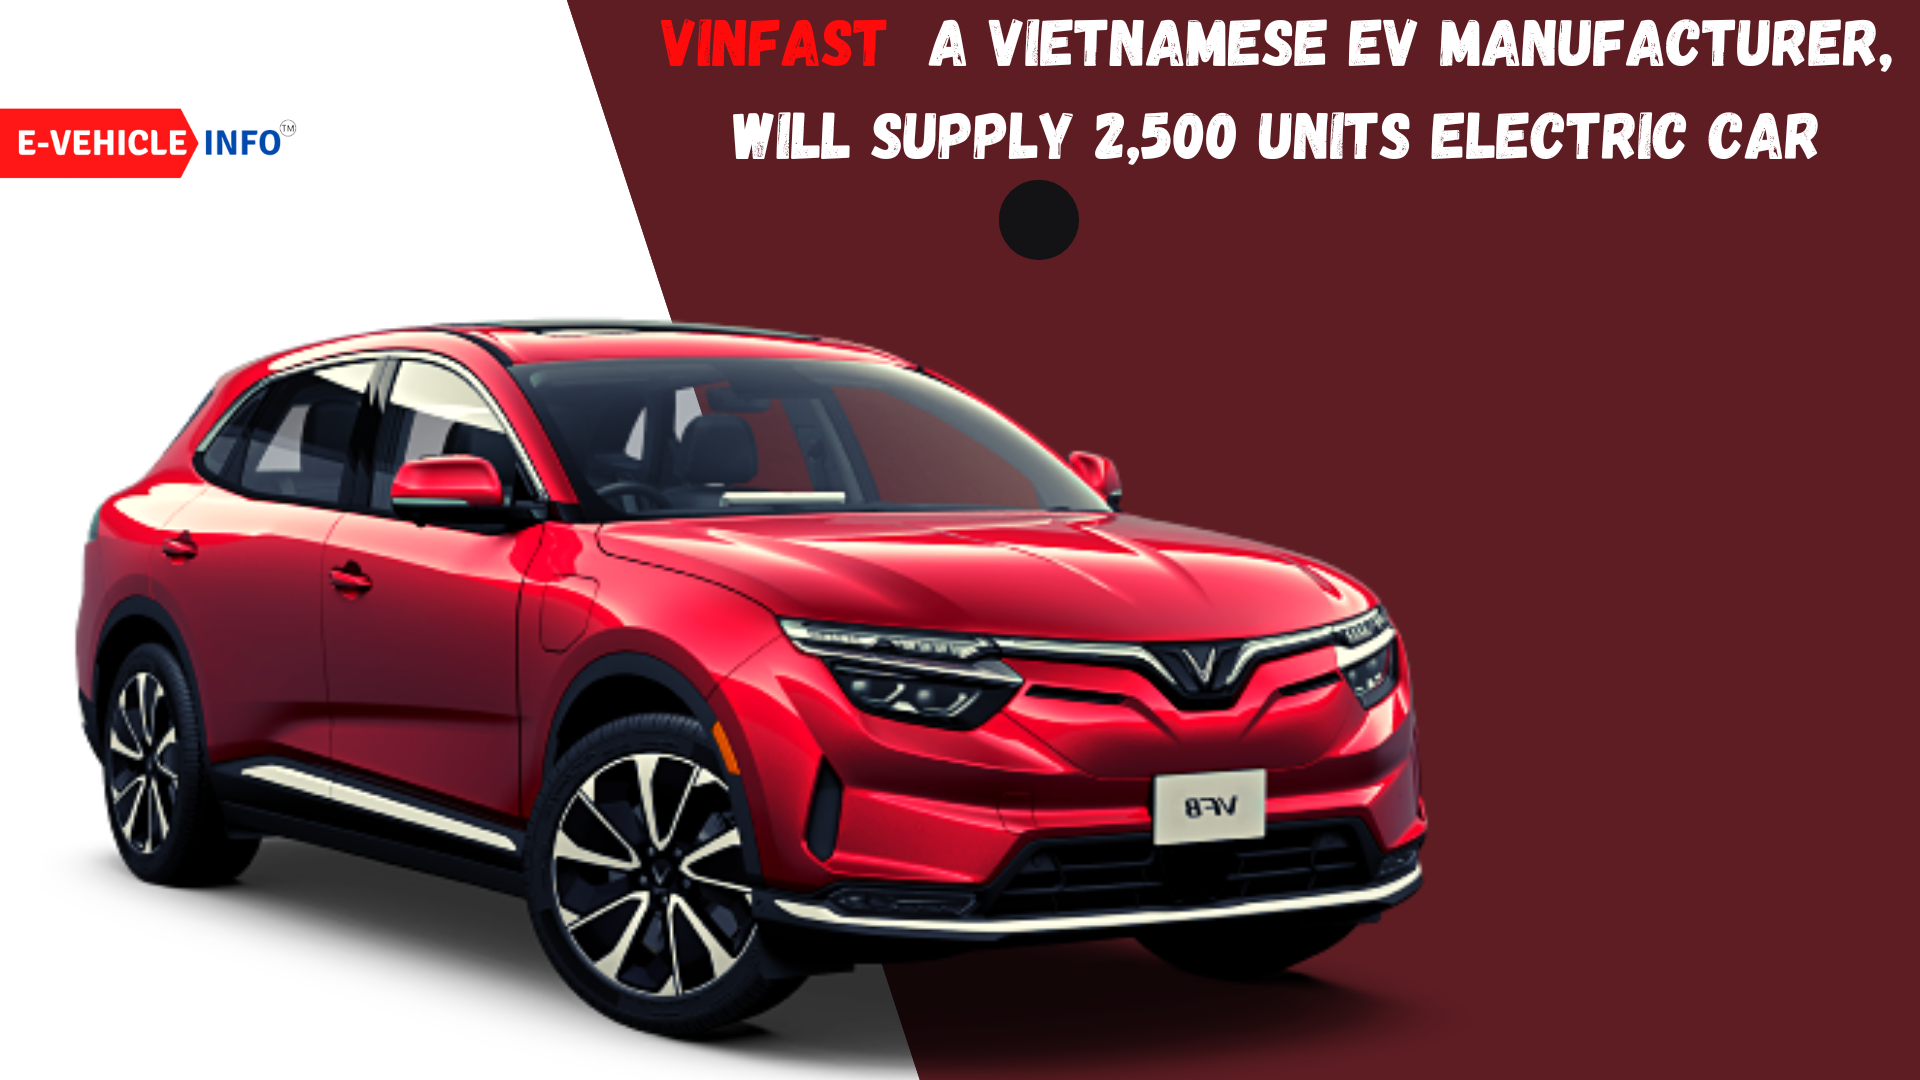 Vietnamese EV Manufacturer VinFast will supply 2,500 Units Electric Car